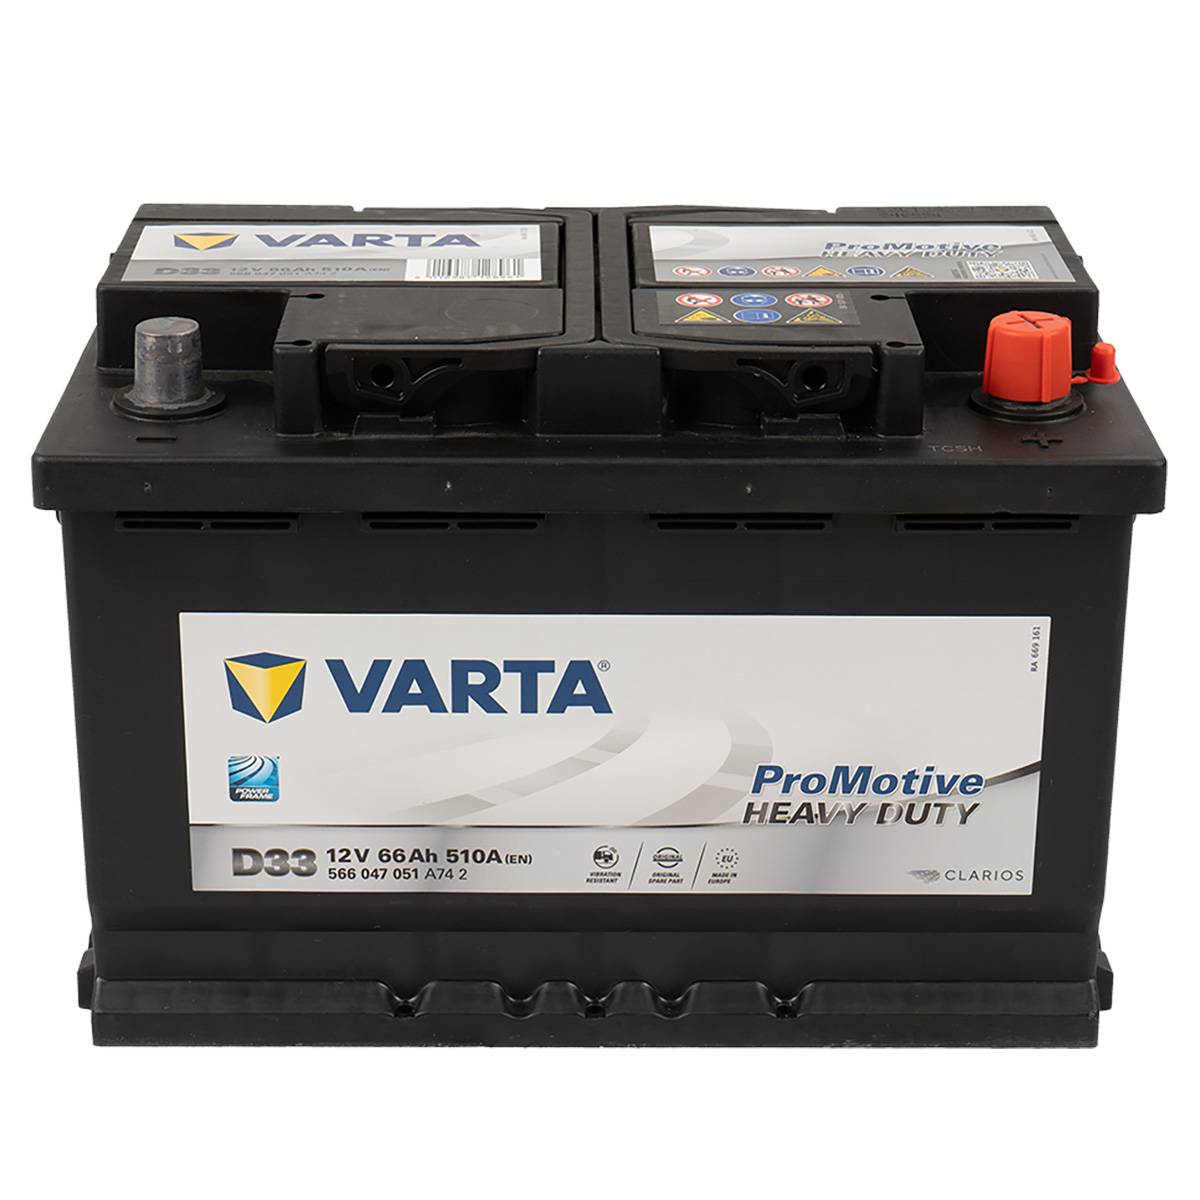 VARTA D33 ProMotive Heavy Duty 12V 66Ah 510A LKW Batterie 566 047 051